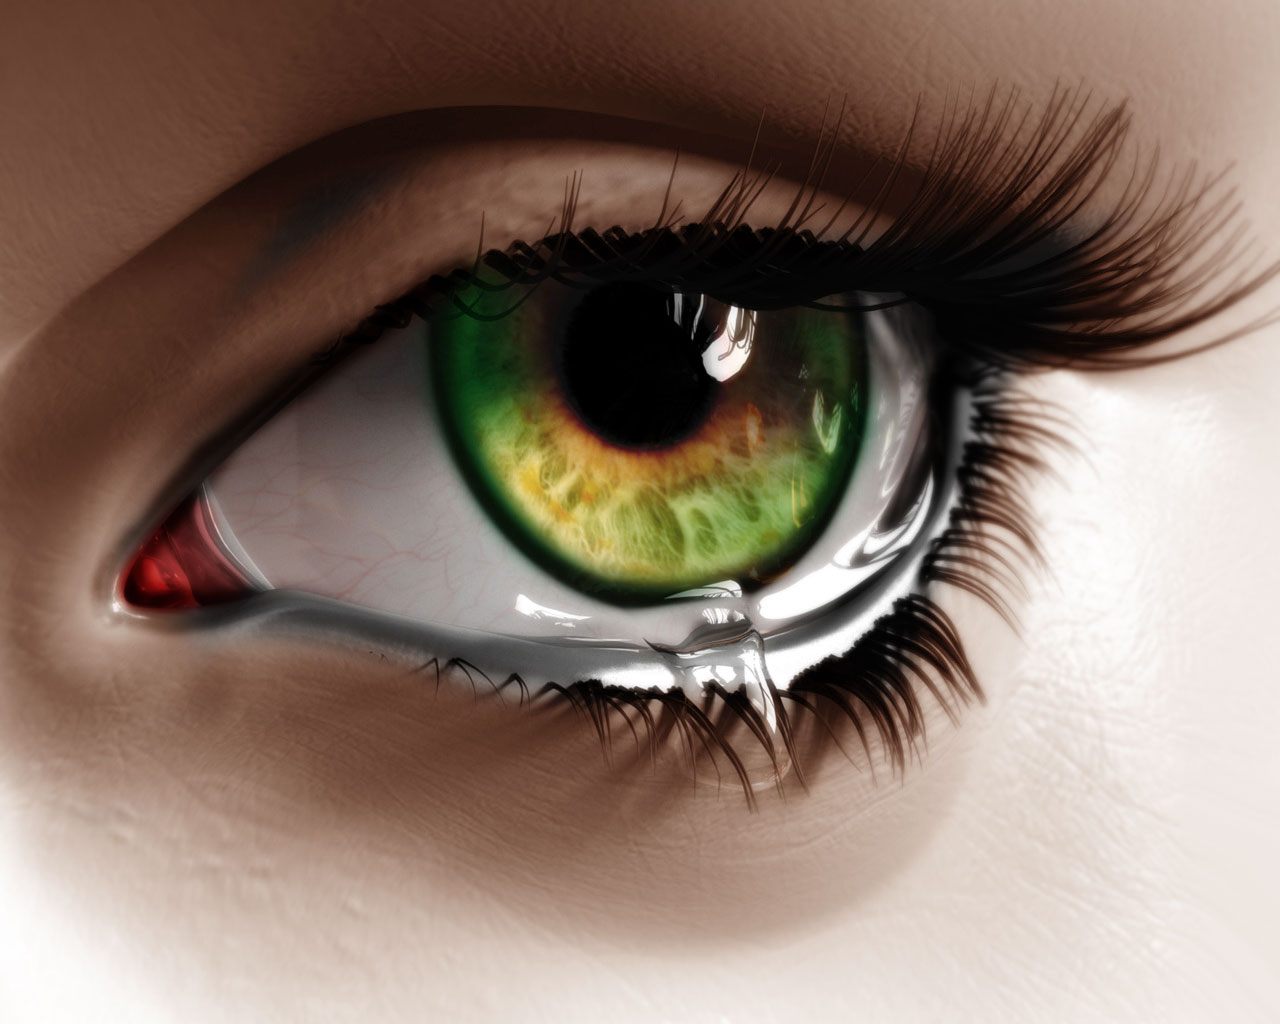 sad eyes wallpaper,green,eye,eyelash,eyebrow,iris